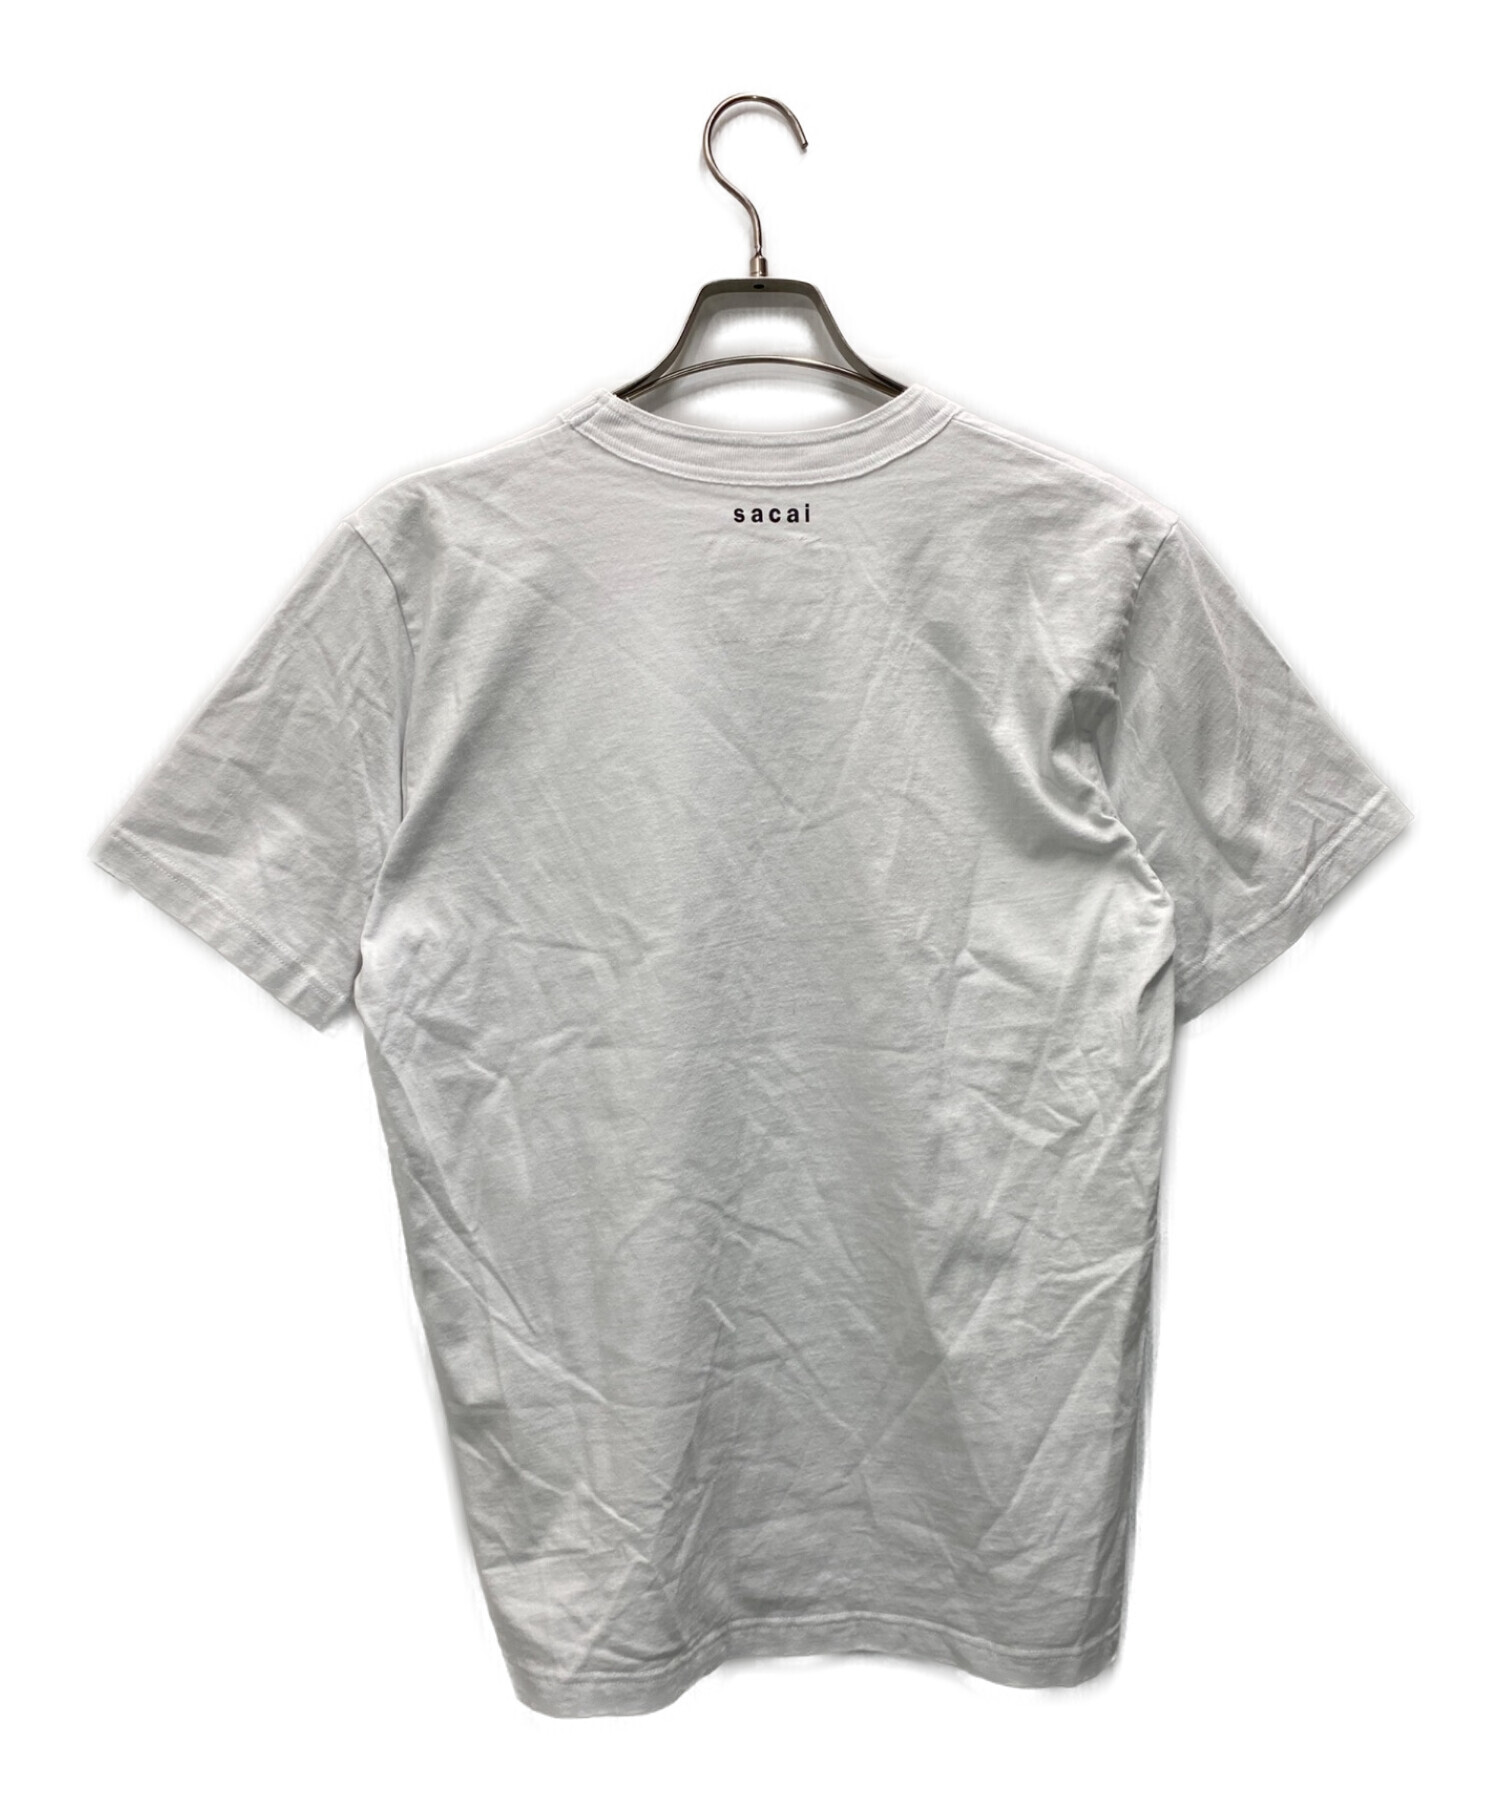 sacai (サカイ) TRANsition T-Shirt ホワイト サイズ:3